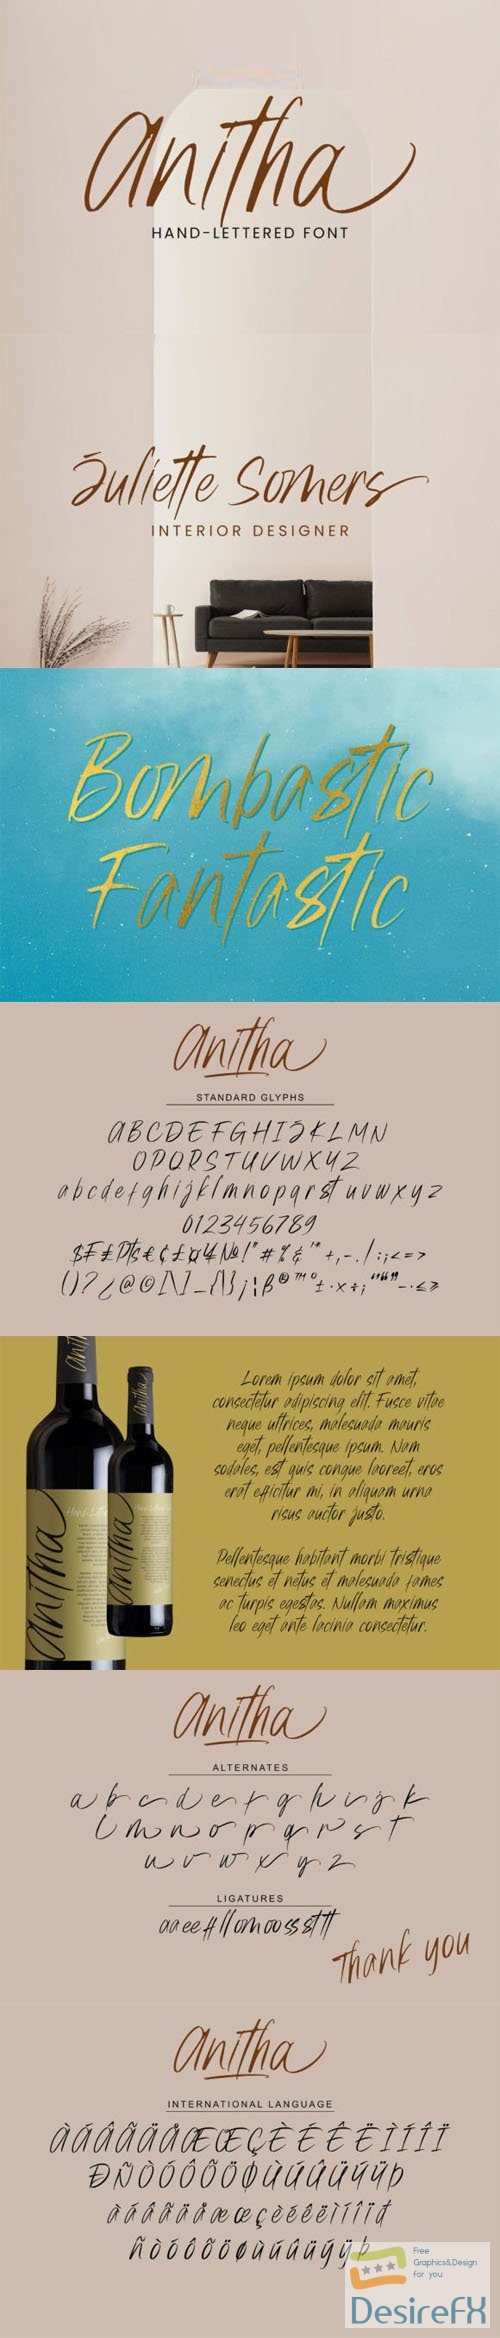 Anitha Hand lettered Font